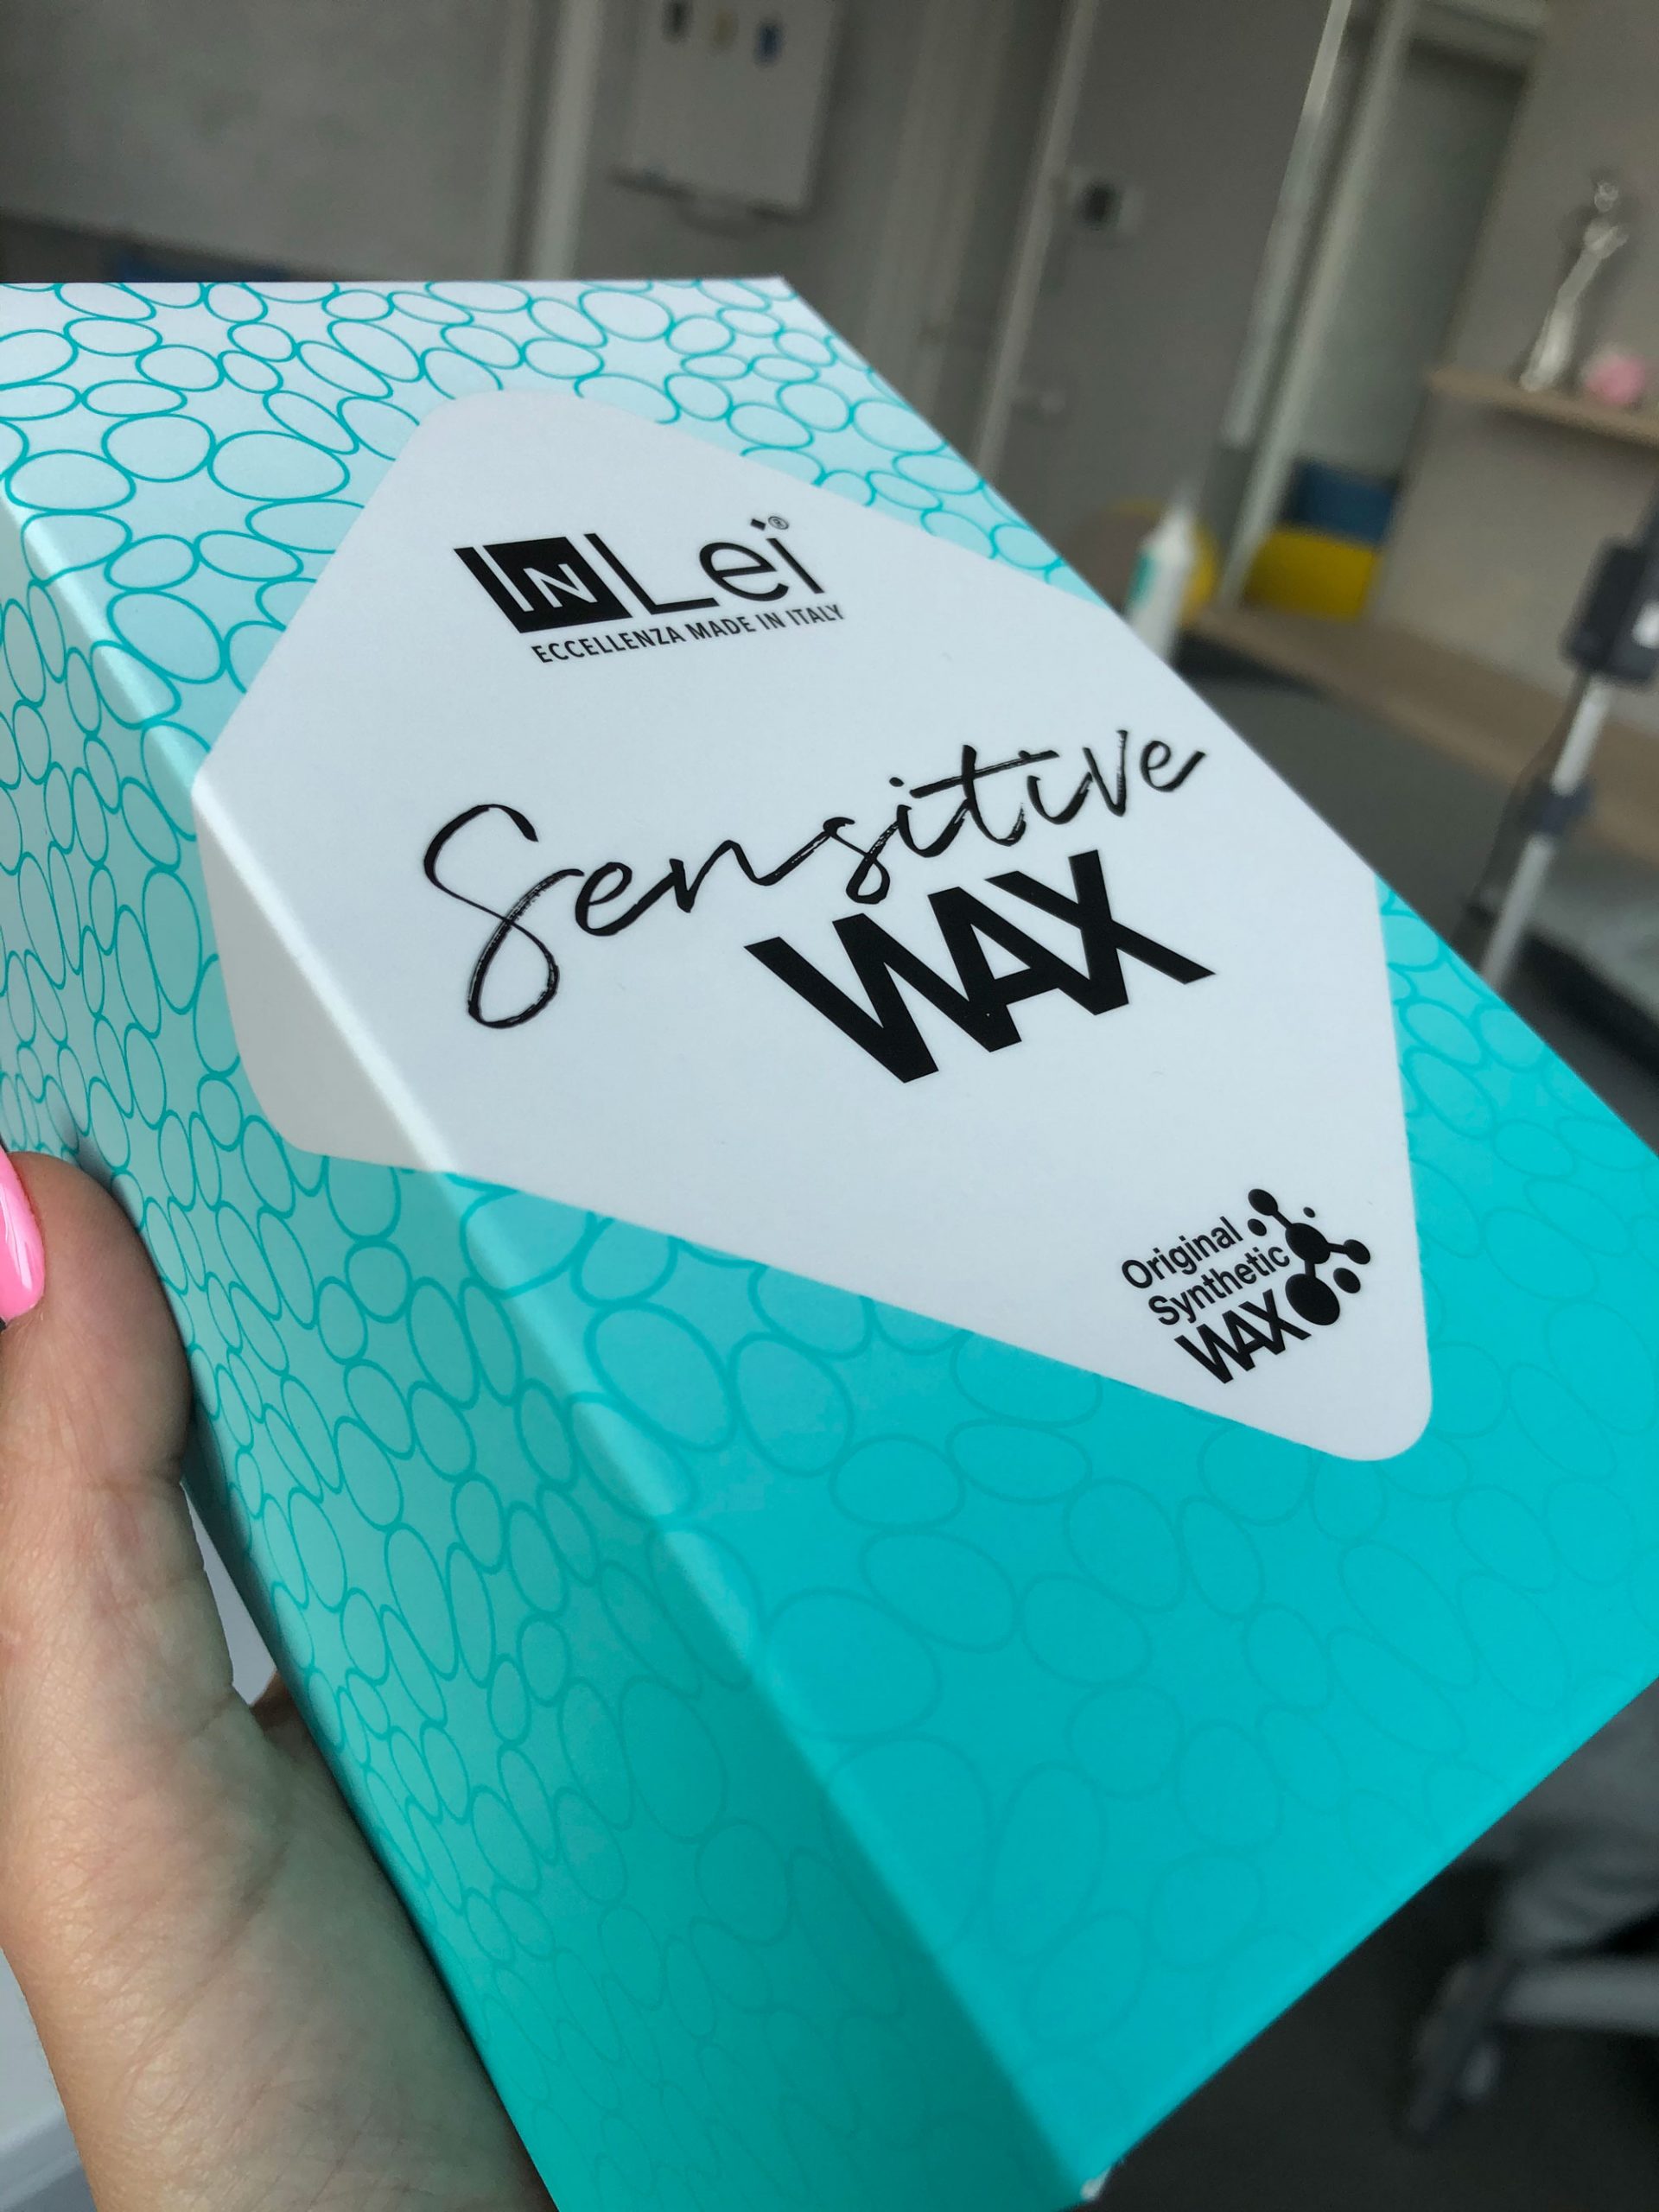 InLei Sensitive Wax packaging